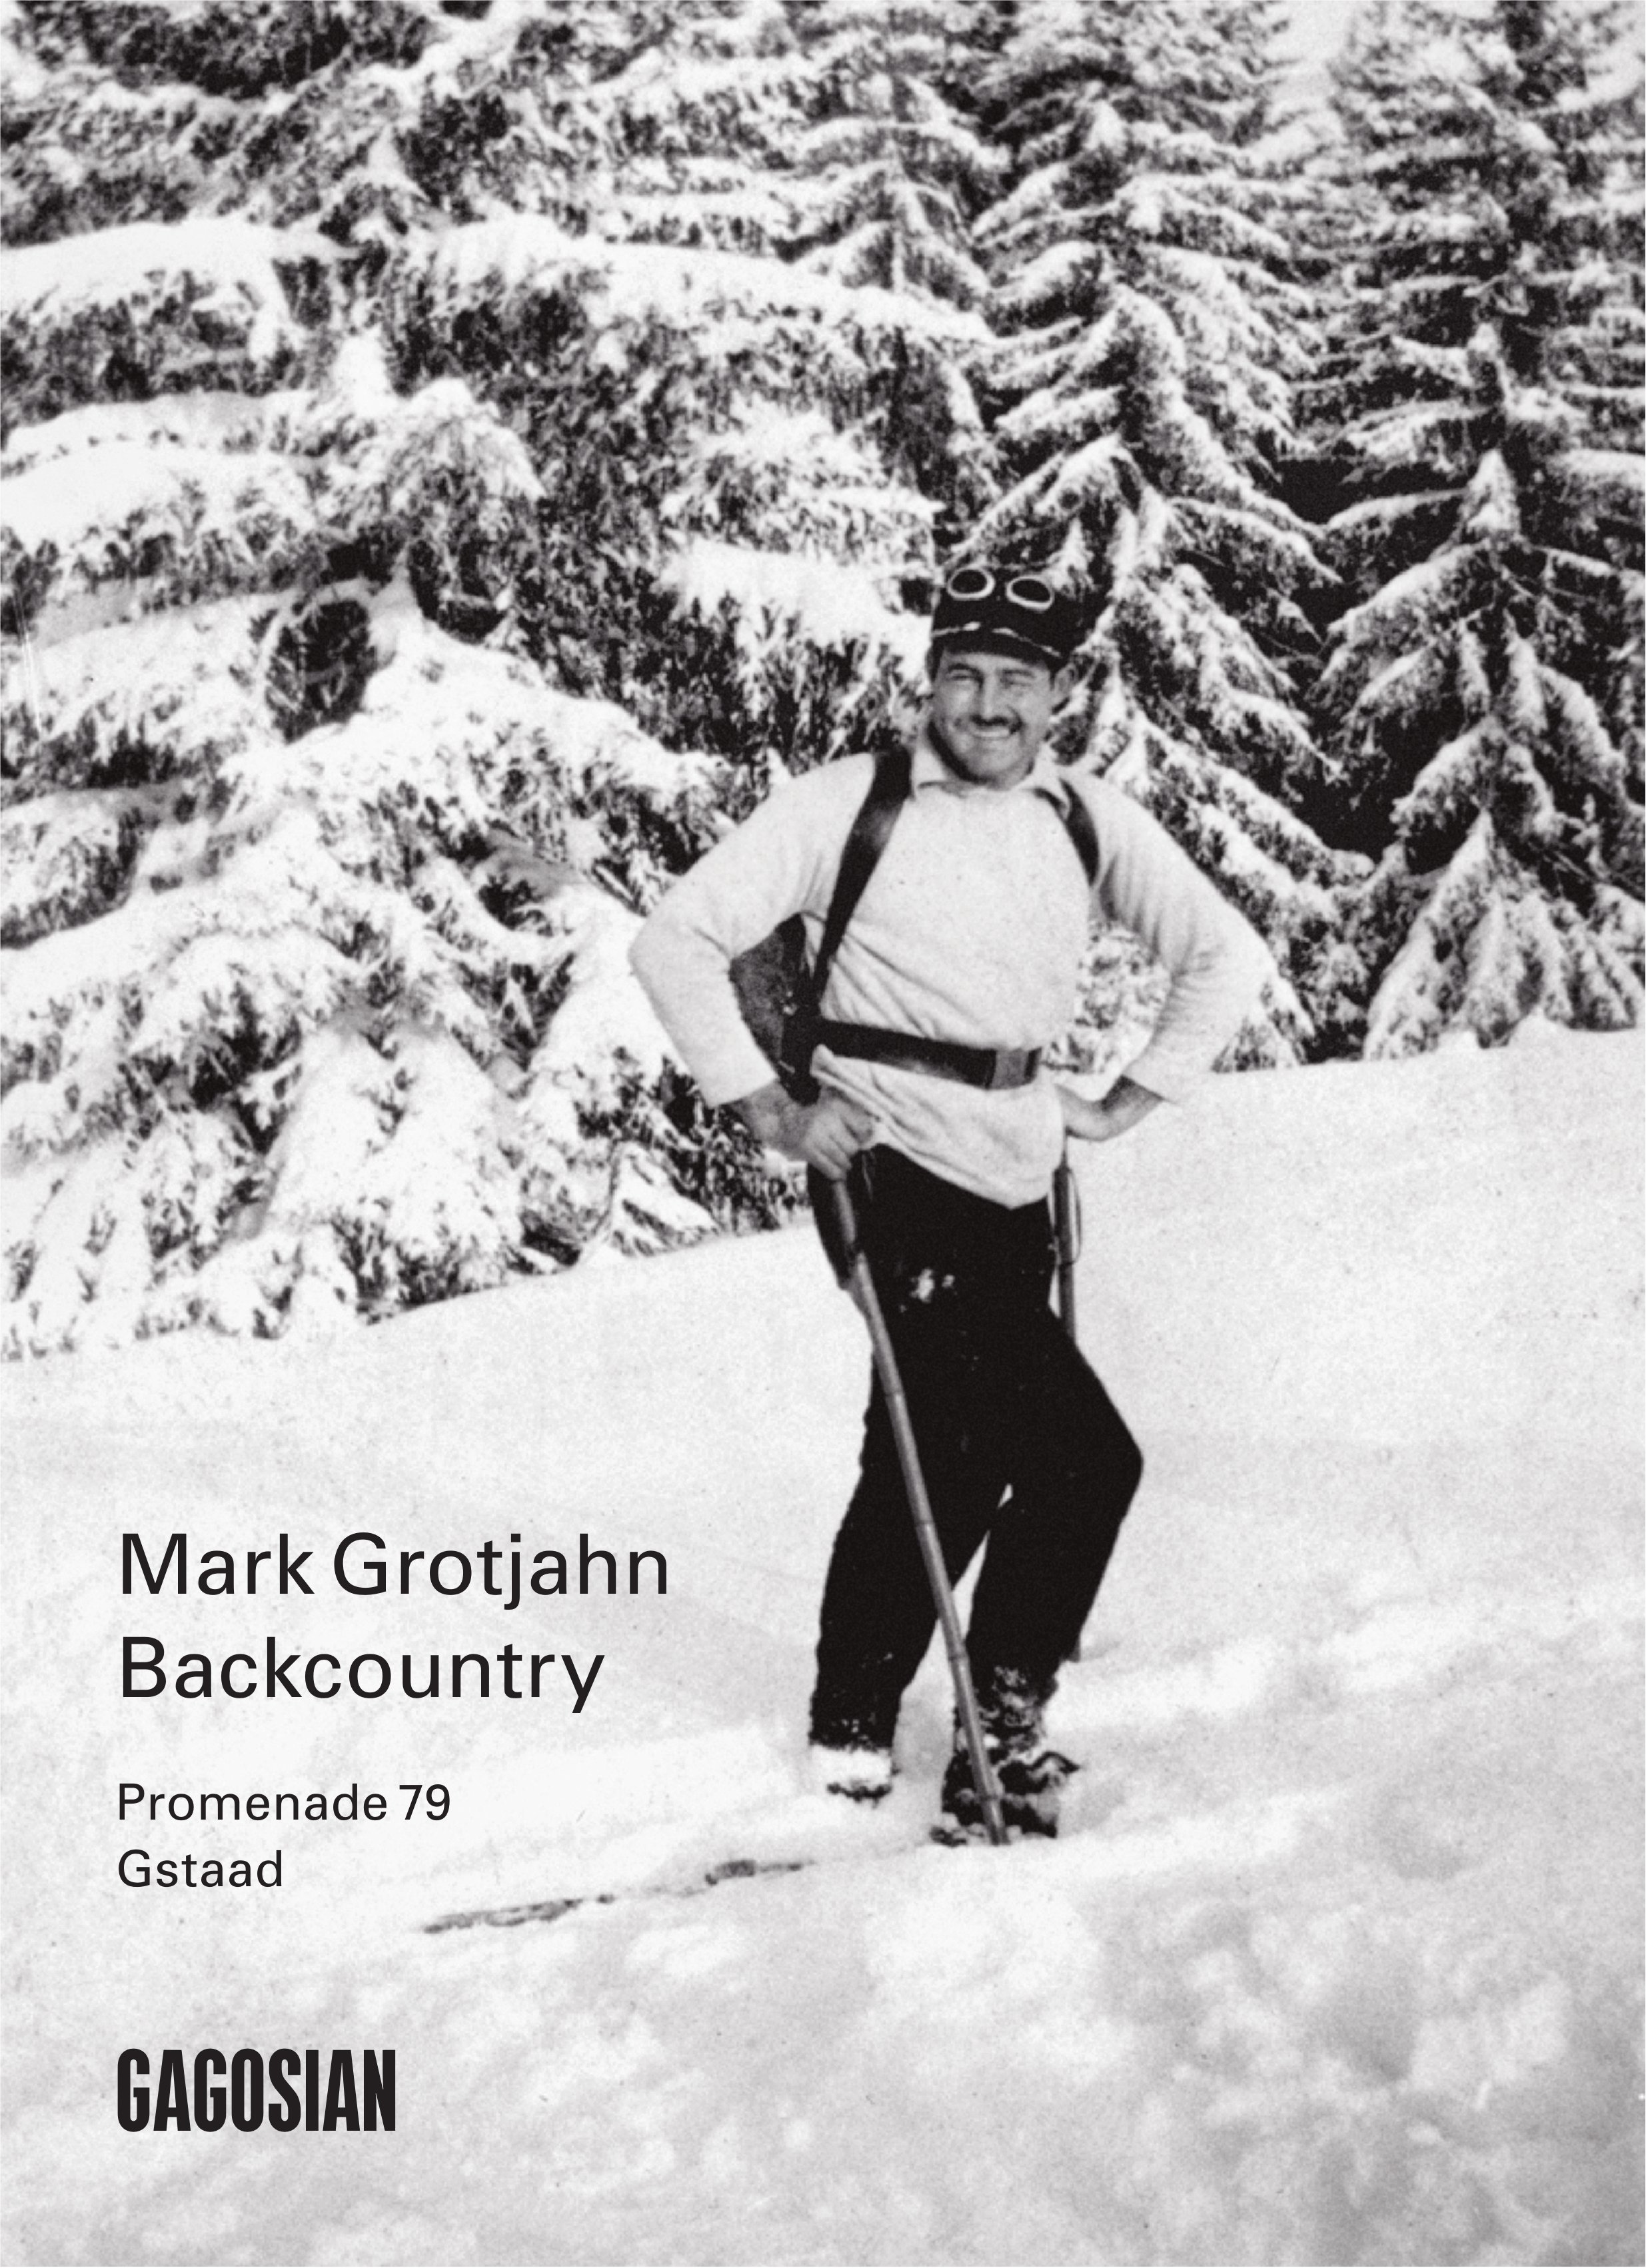 Gagosian, Gstaad - Mark Grotjahn Backcountry